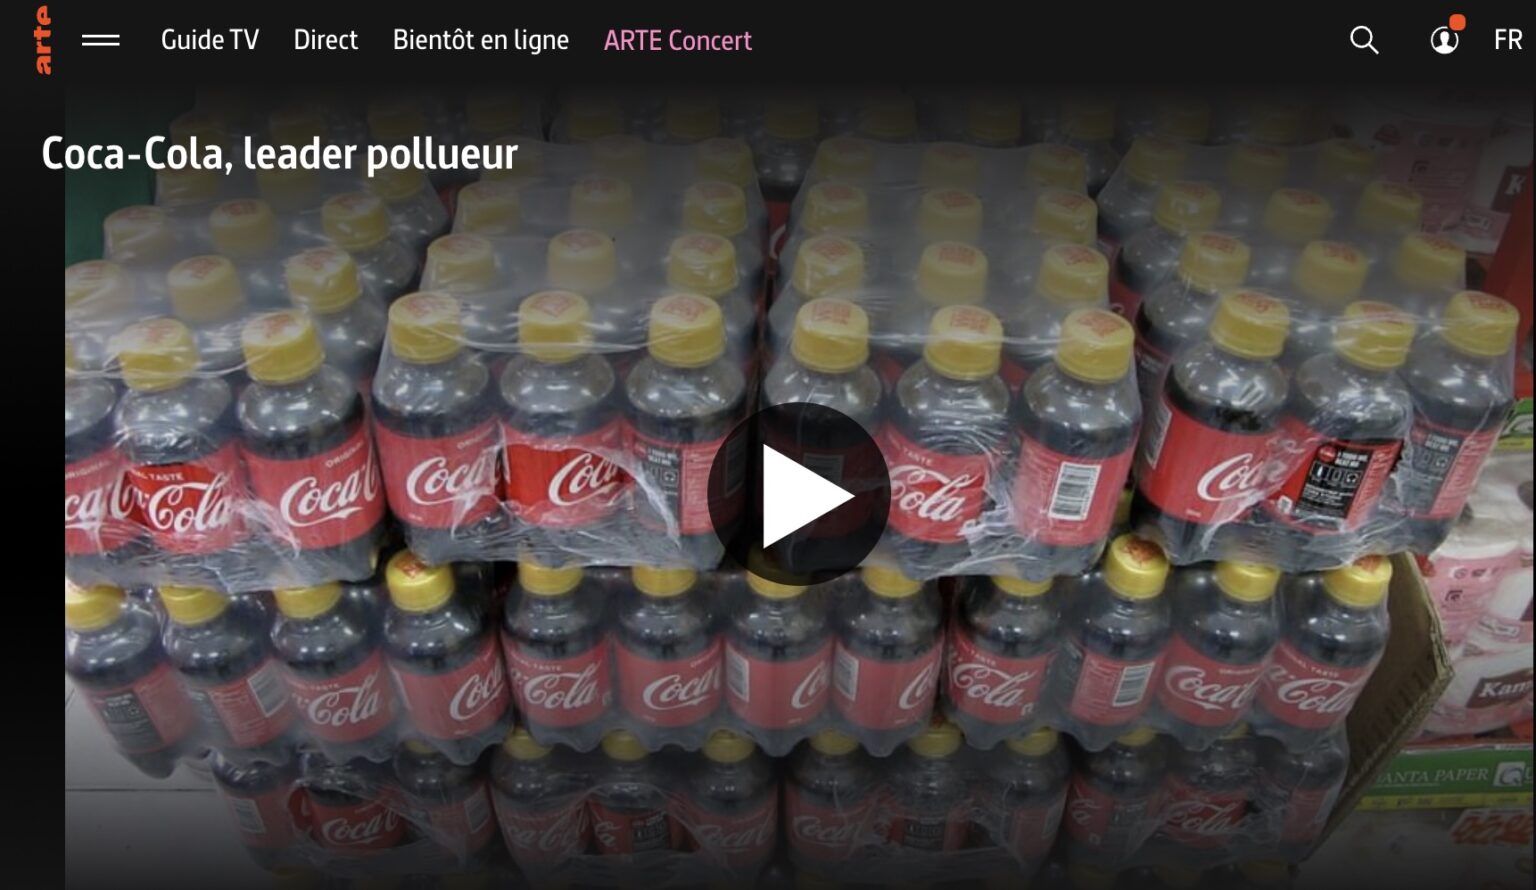 Coca-Cola, leader pollueur, de Laura Mulholland, disponible sur arte jusq’au 23 octobre 2022